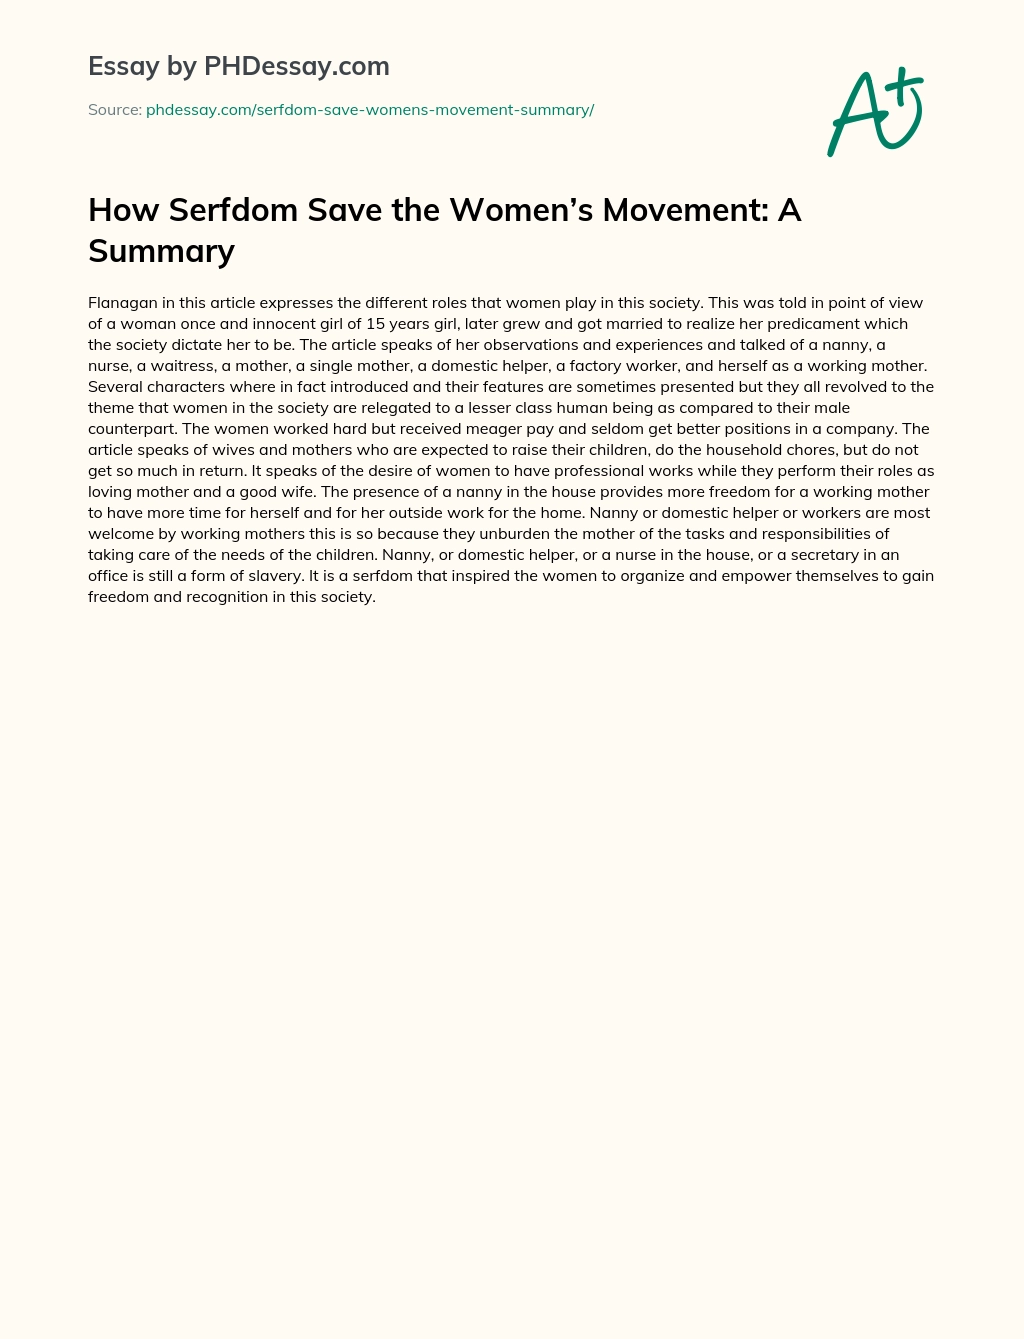 How Serfdom Save the Women’s Movement: A Summary essay